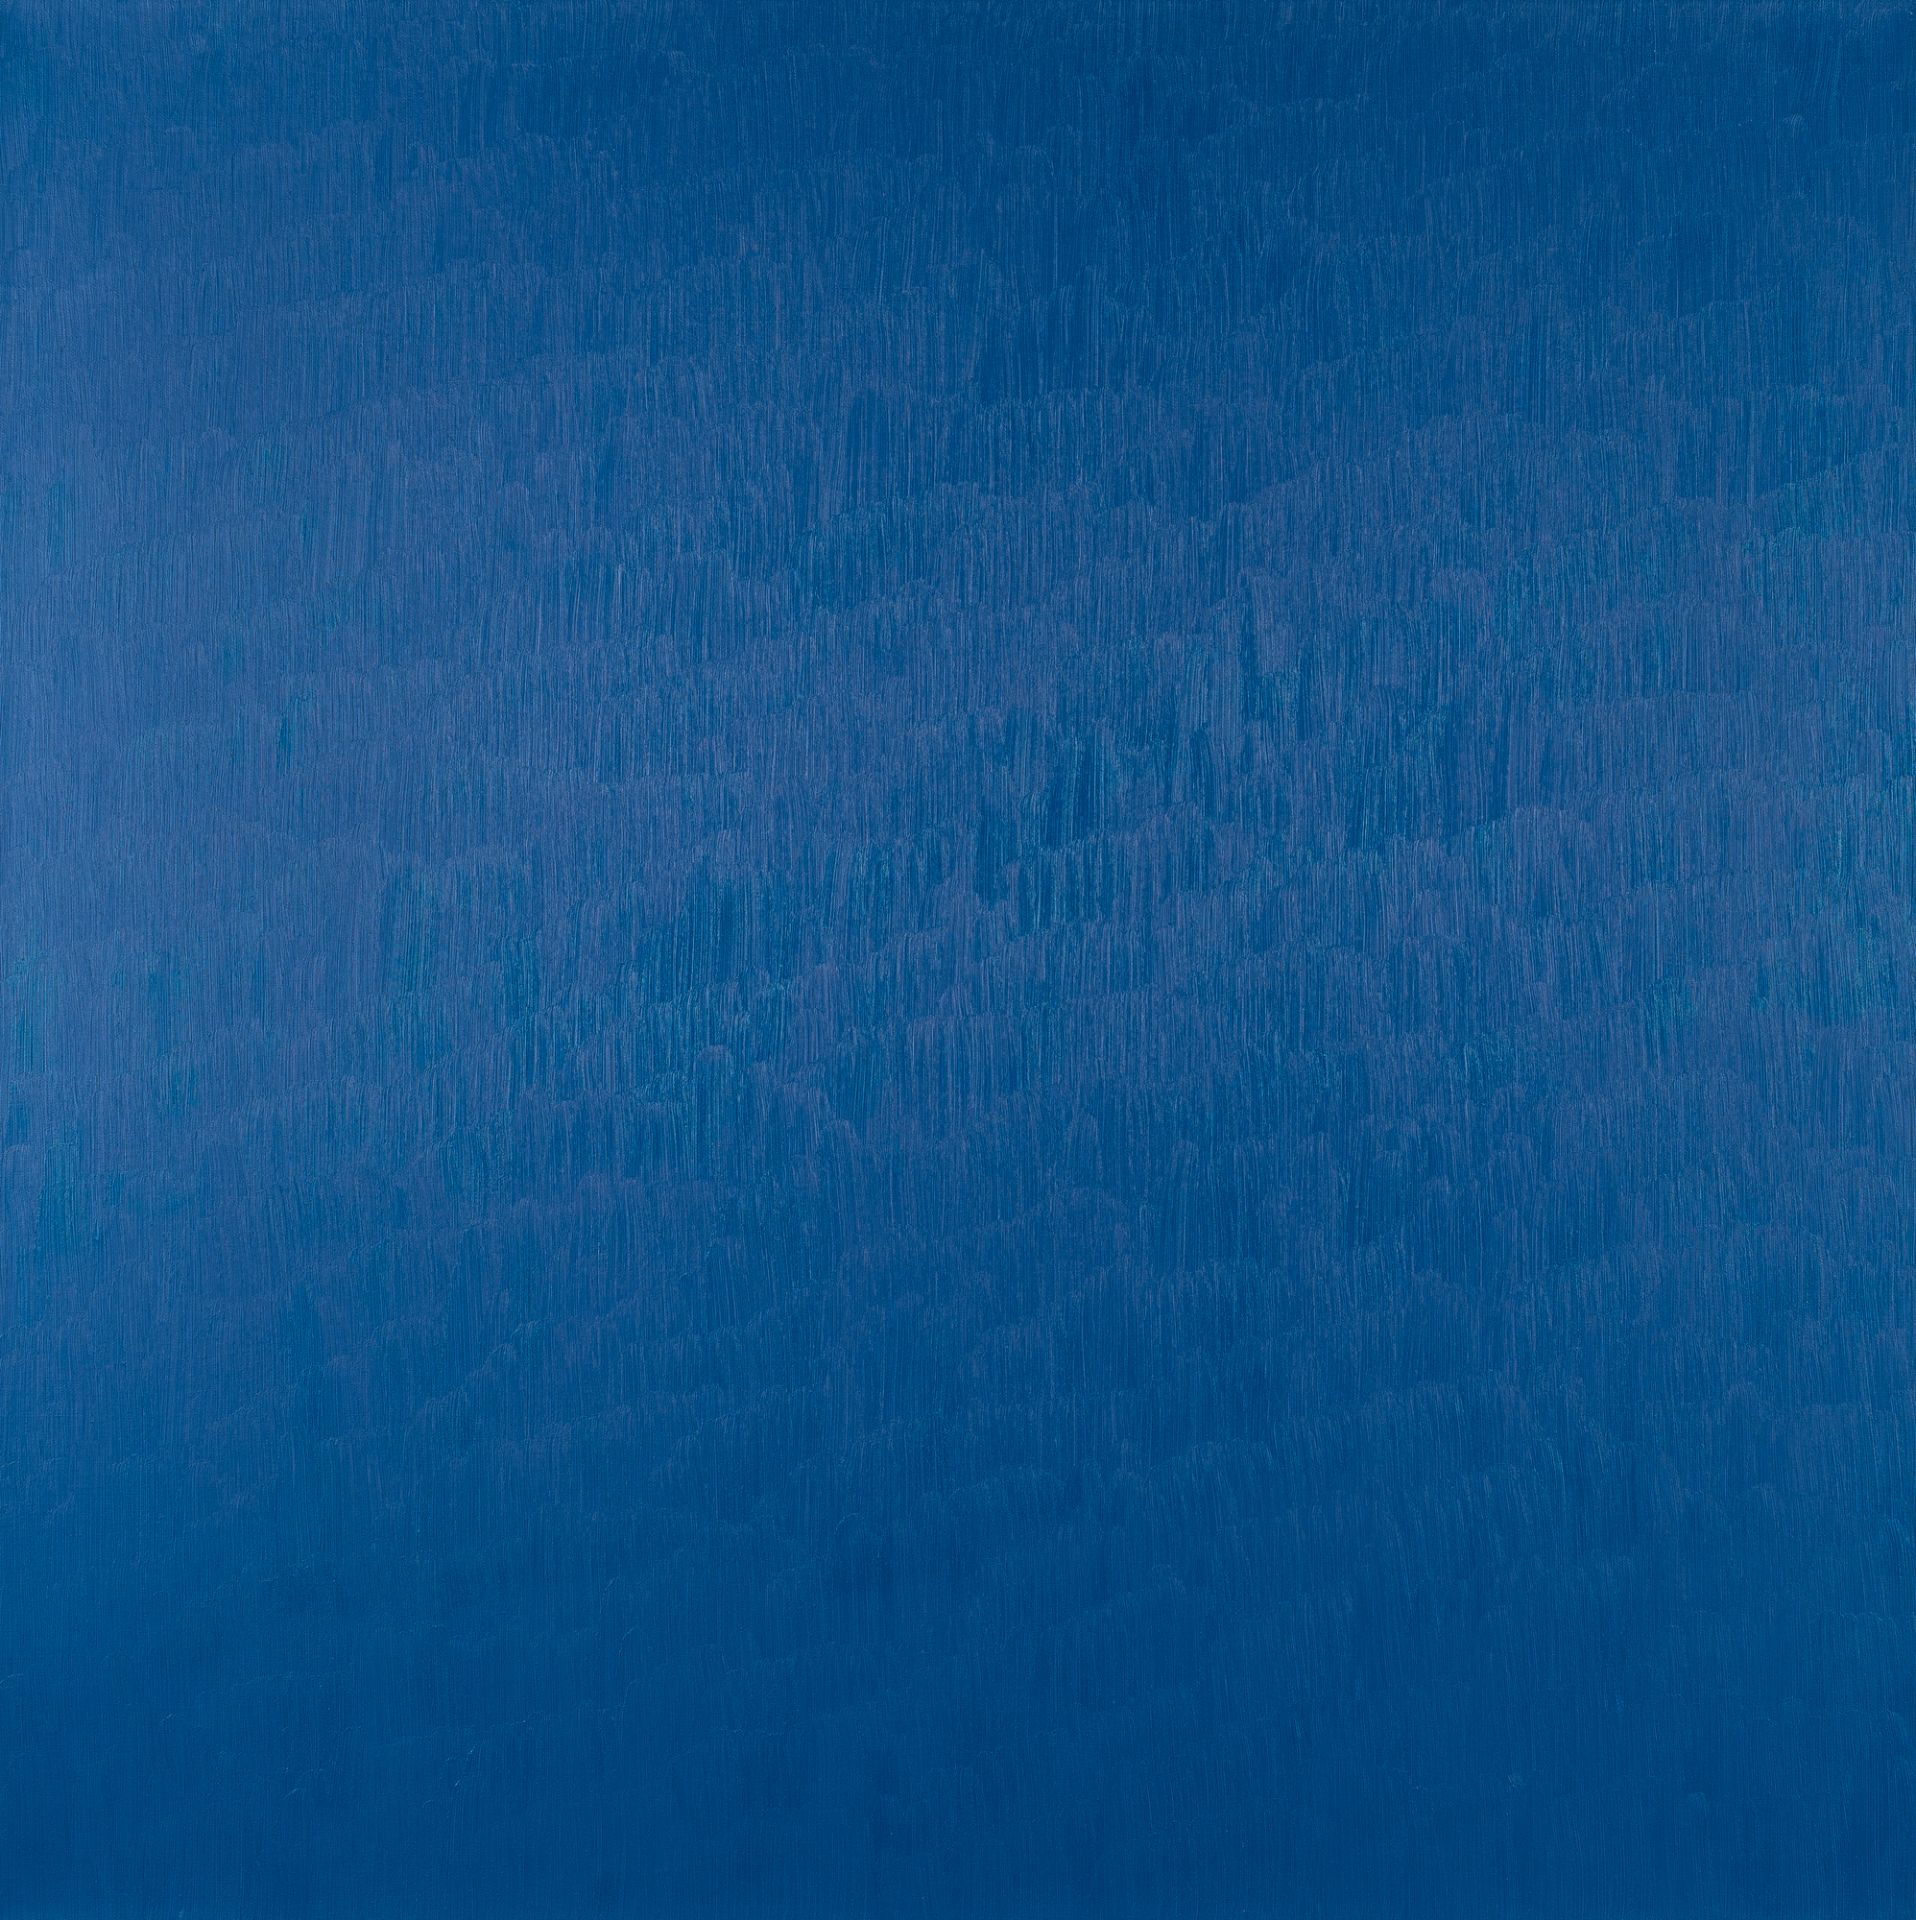 Marcia Hafif (1929 Pomona - Laguna Beach 2018), “Heliogen Blue”Oil on canvas. 2000. Ca. 81 x 81